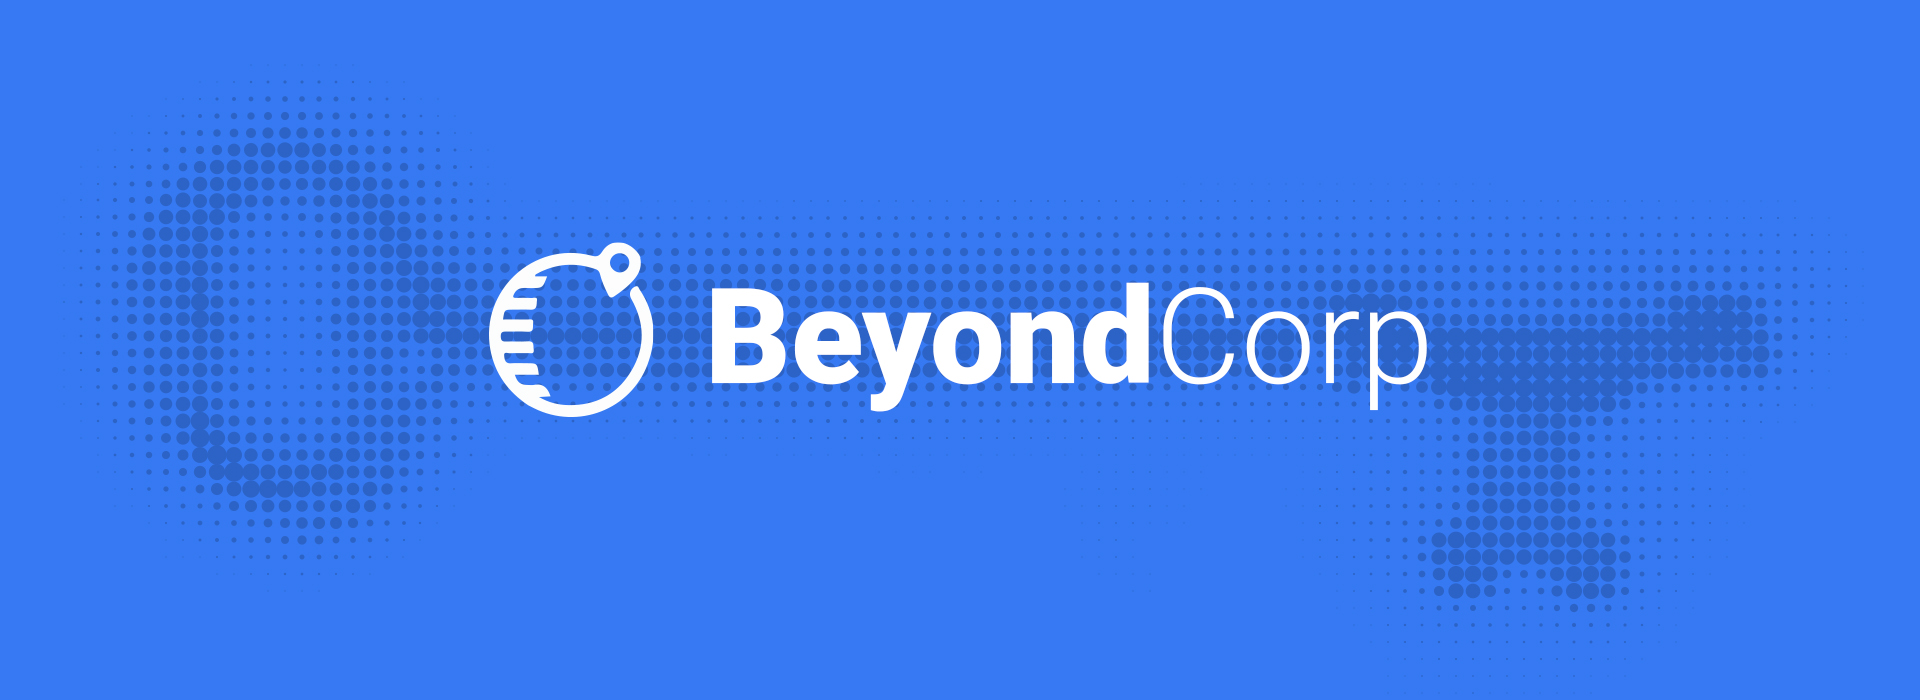 beyondcorp open source